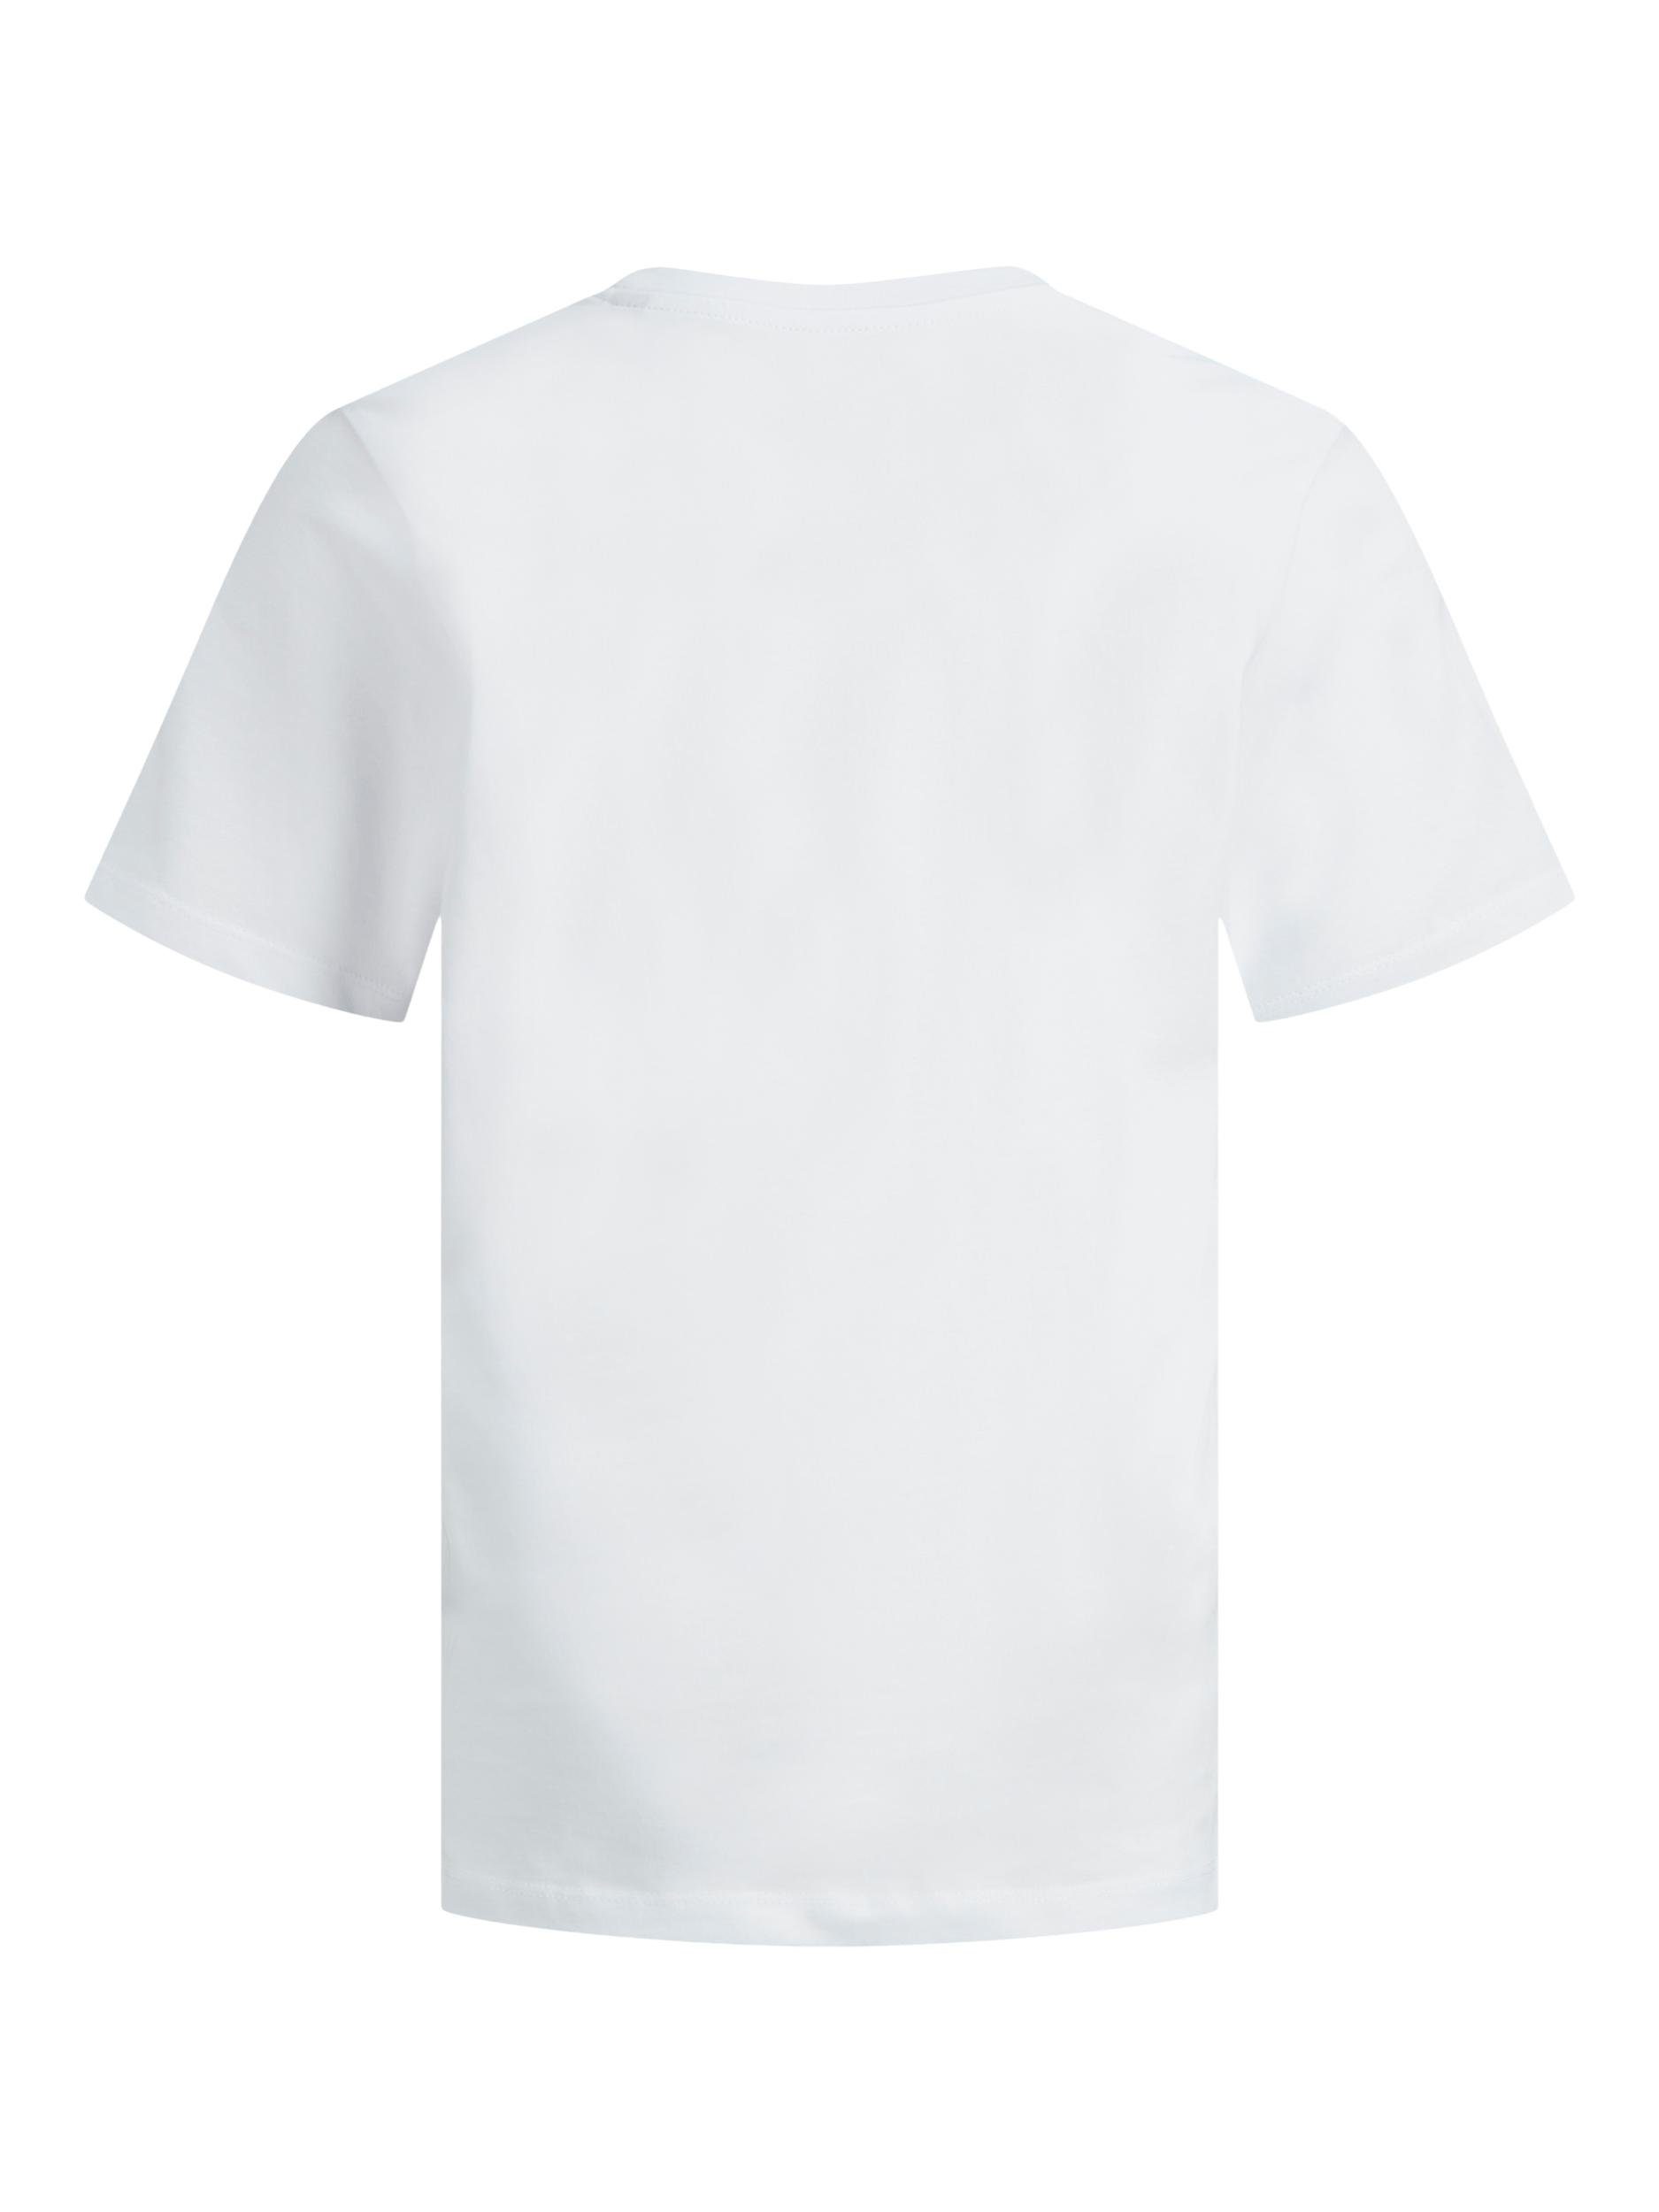 Jack & Jones Junior SS TEE white JR JJECORP T-Shirt PLAY T-Shirt CREW LOGO